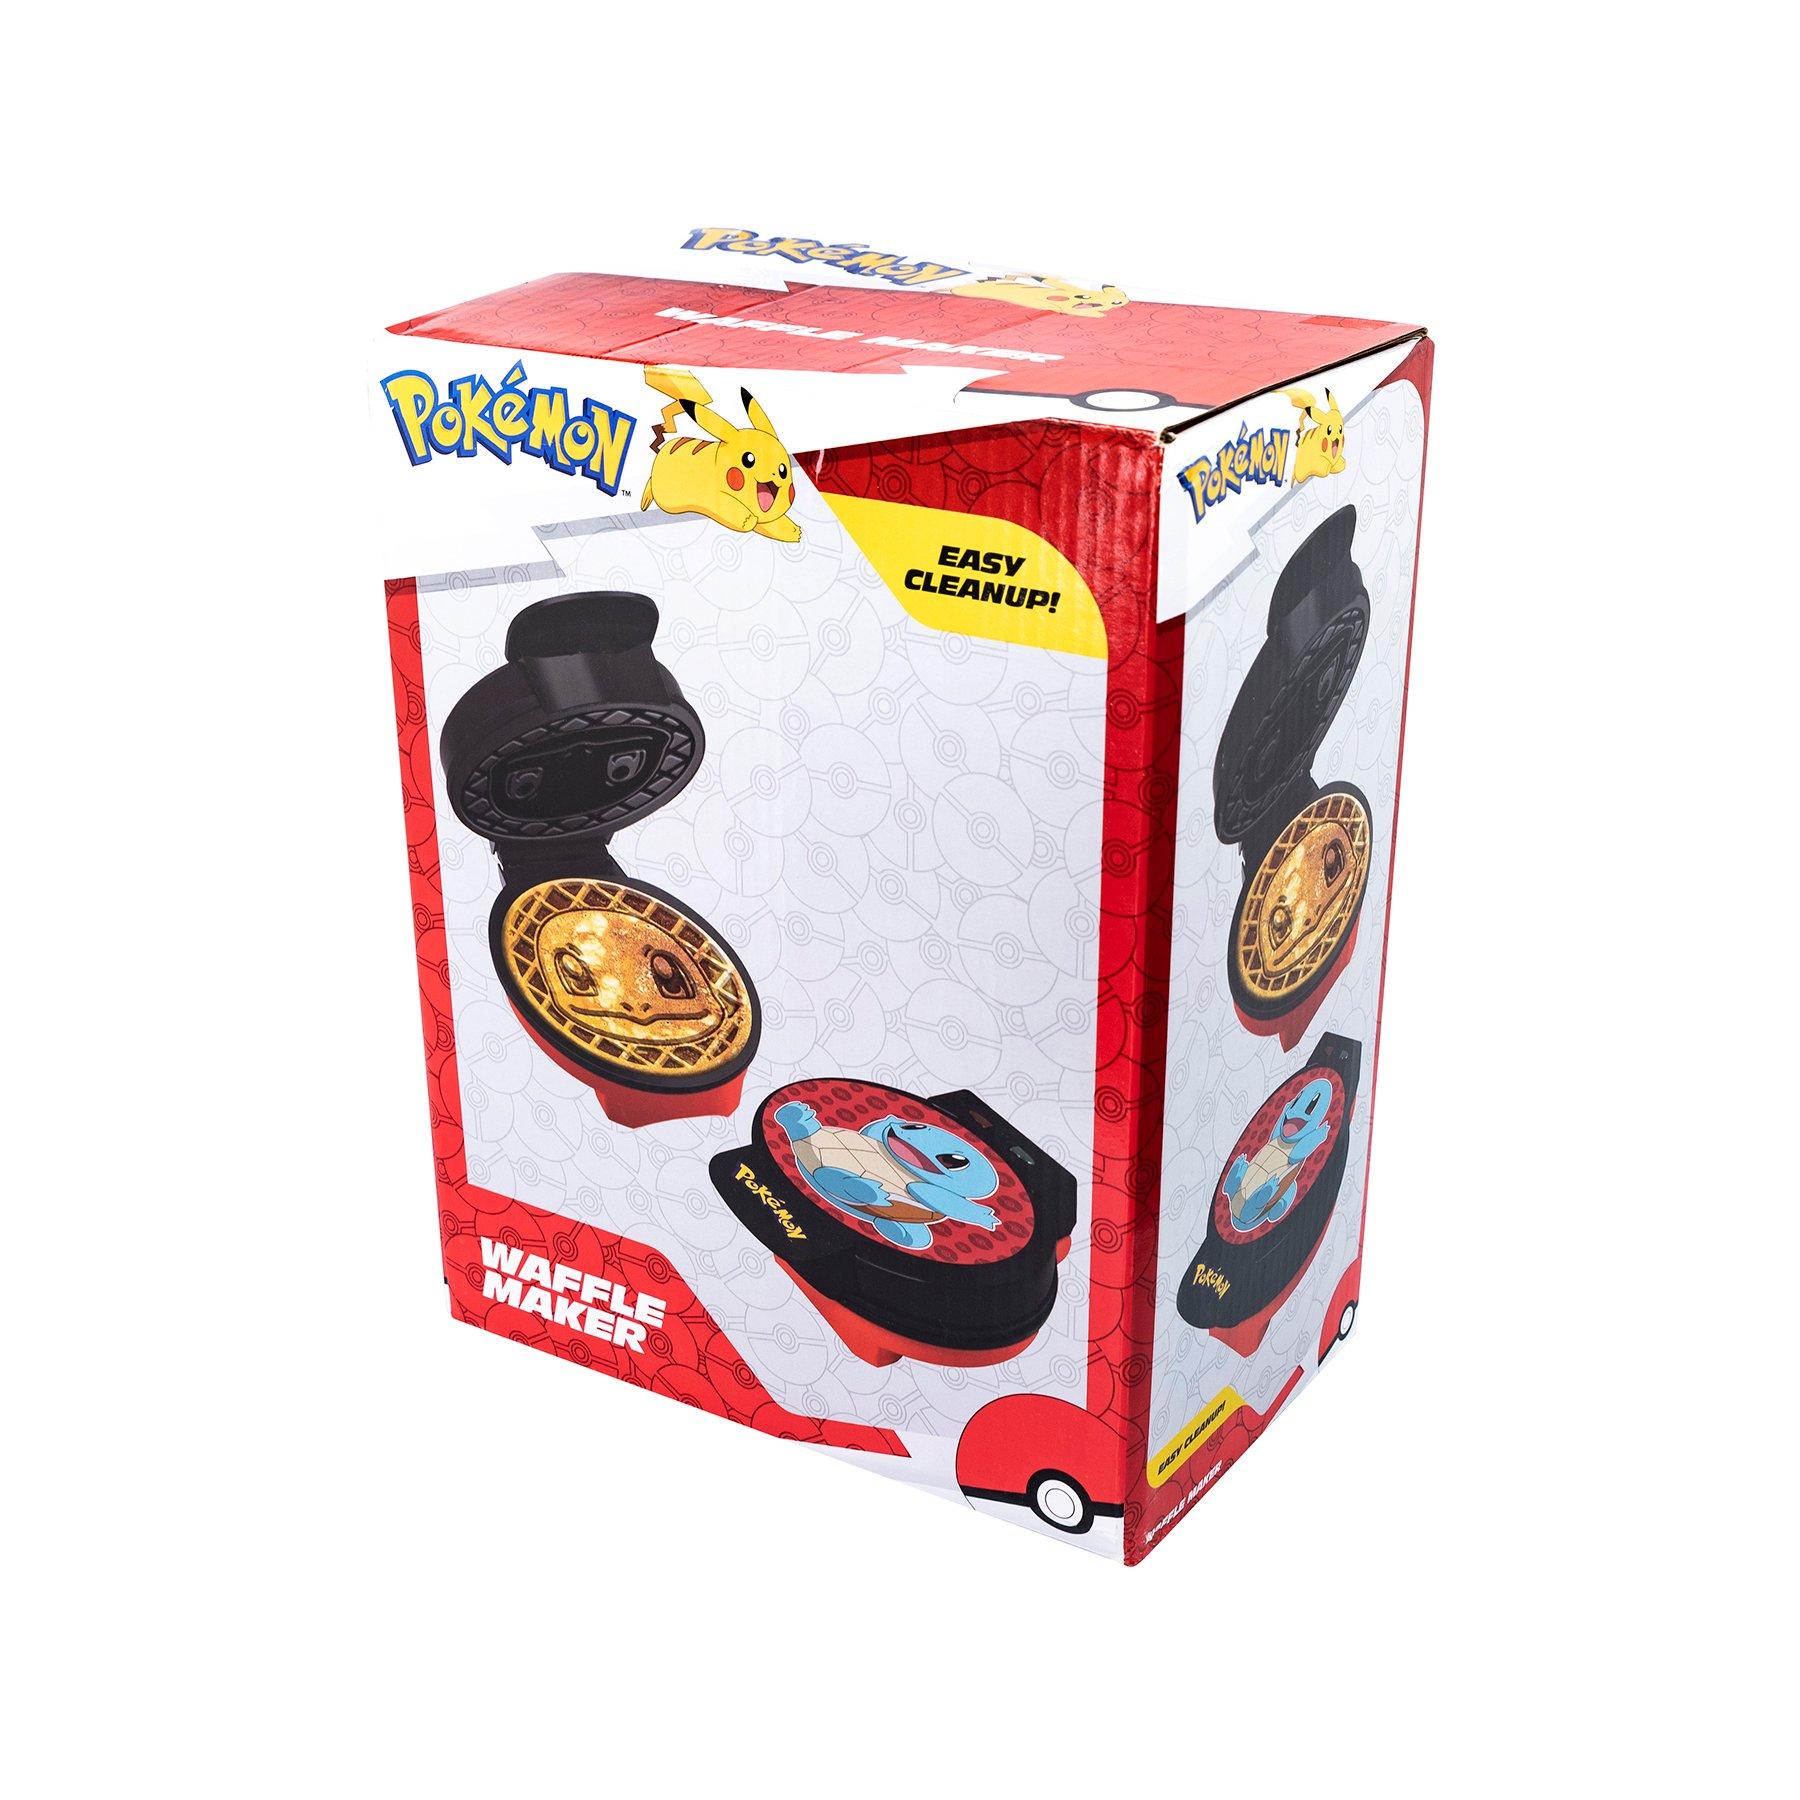 https://media.gamestop.com/i/gamestop/20005673_ALT04/Pokemon-Squirtle-Round-Waffle-Maker?$pdp$